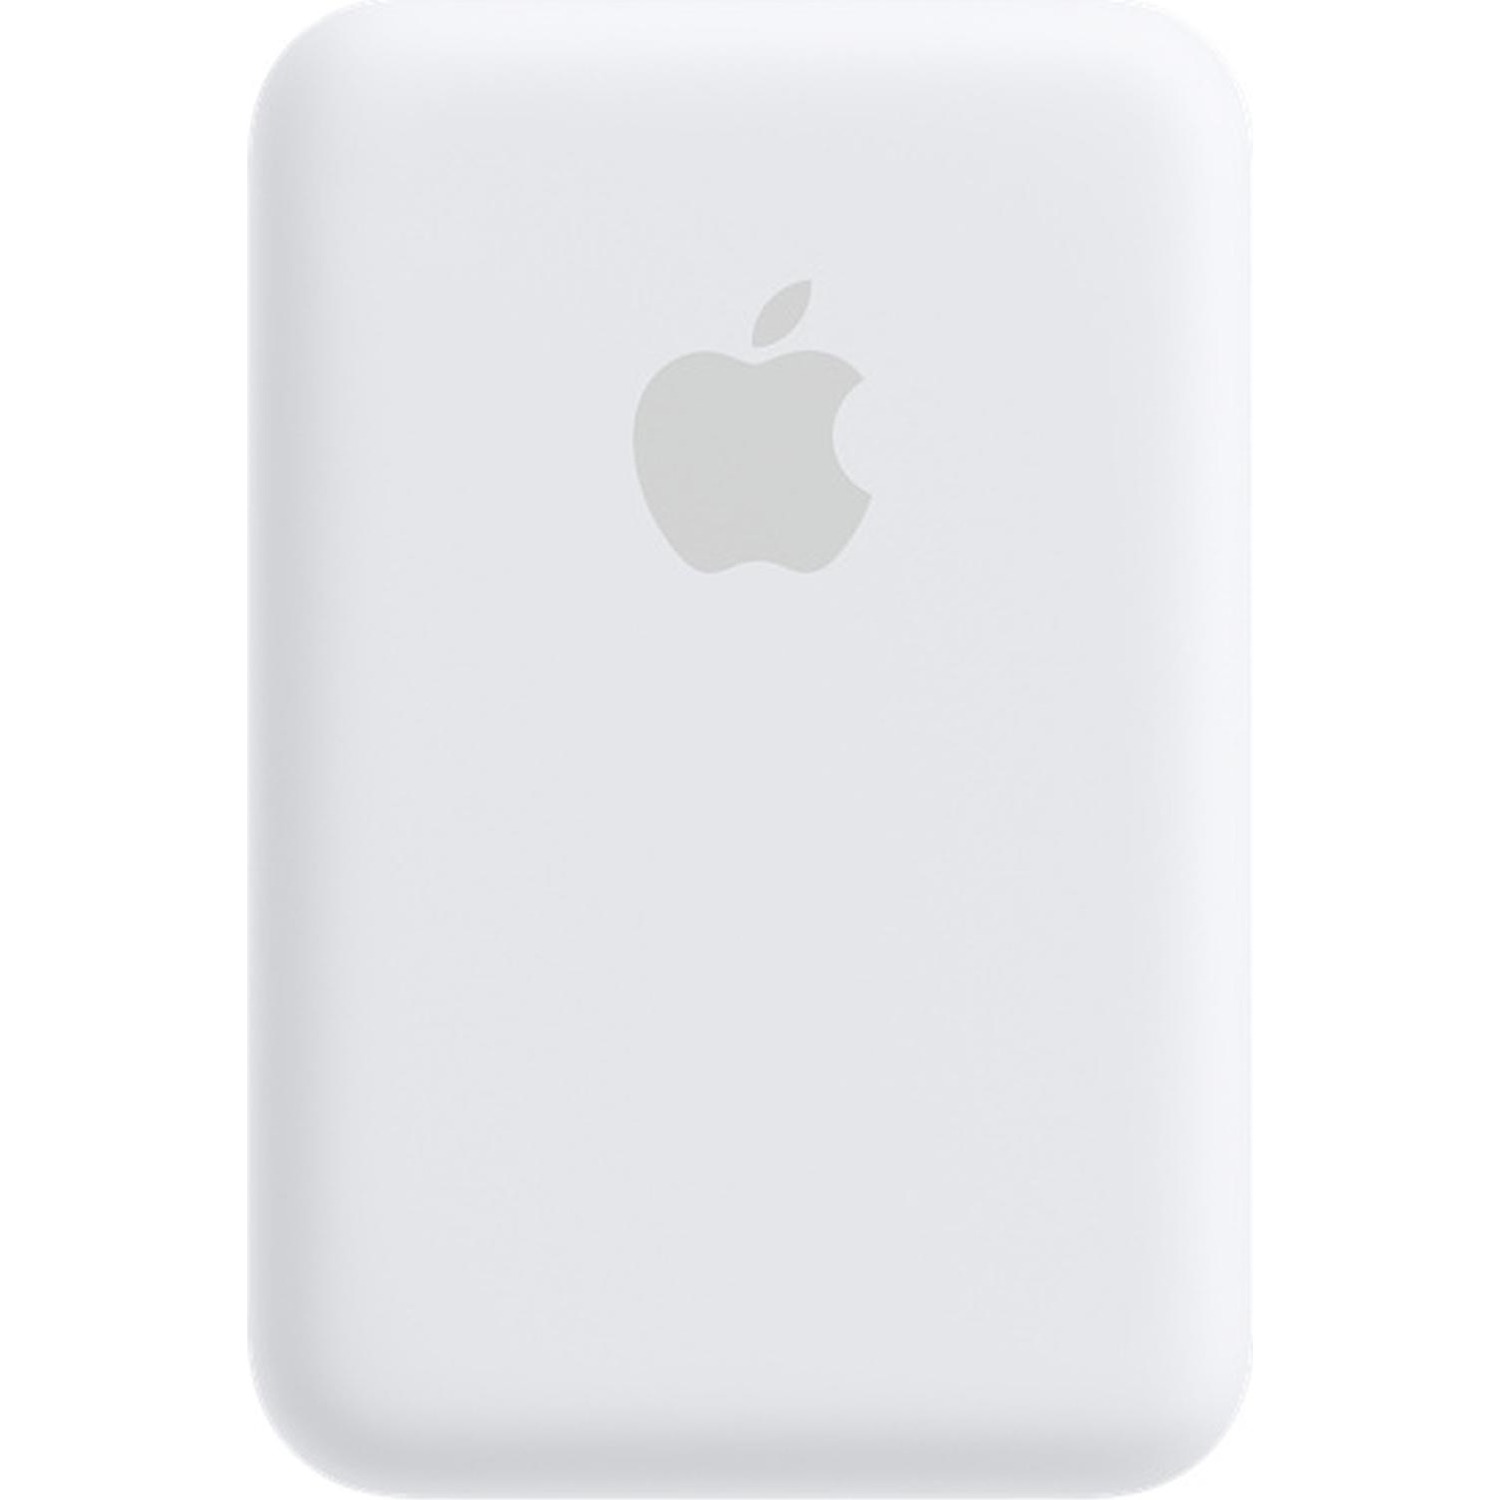 Immagine per Powerbank Apple MagSafe battery pack per iPhone bianco da DIMOStore